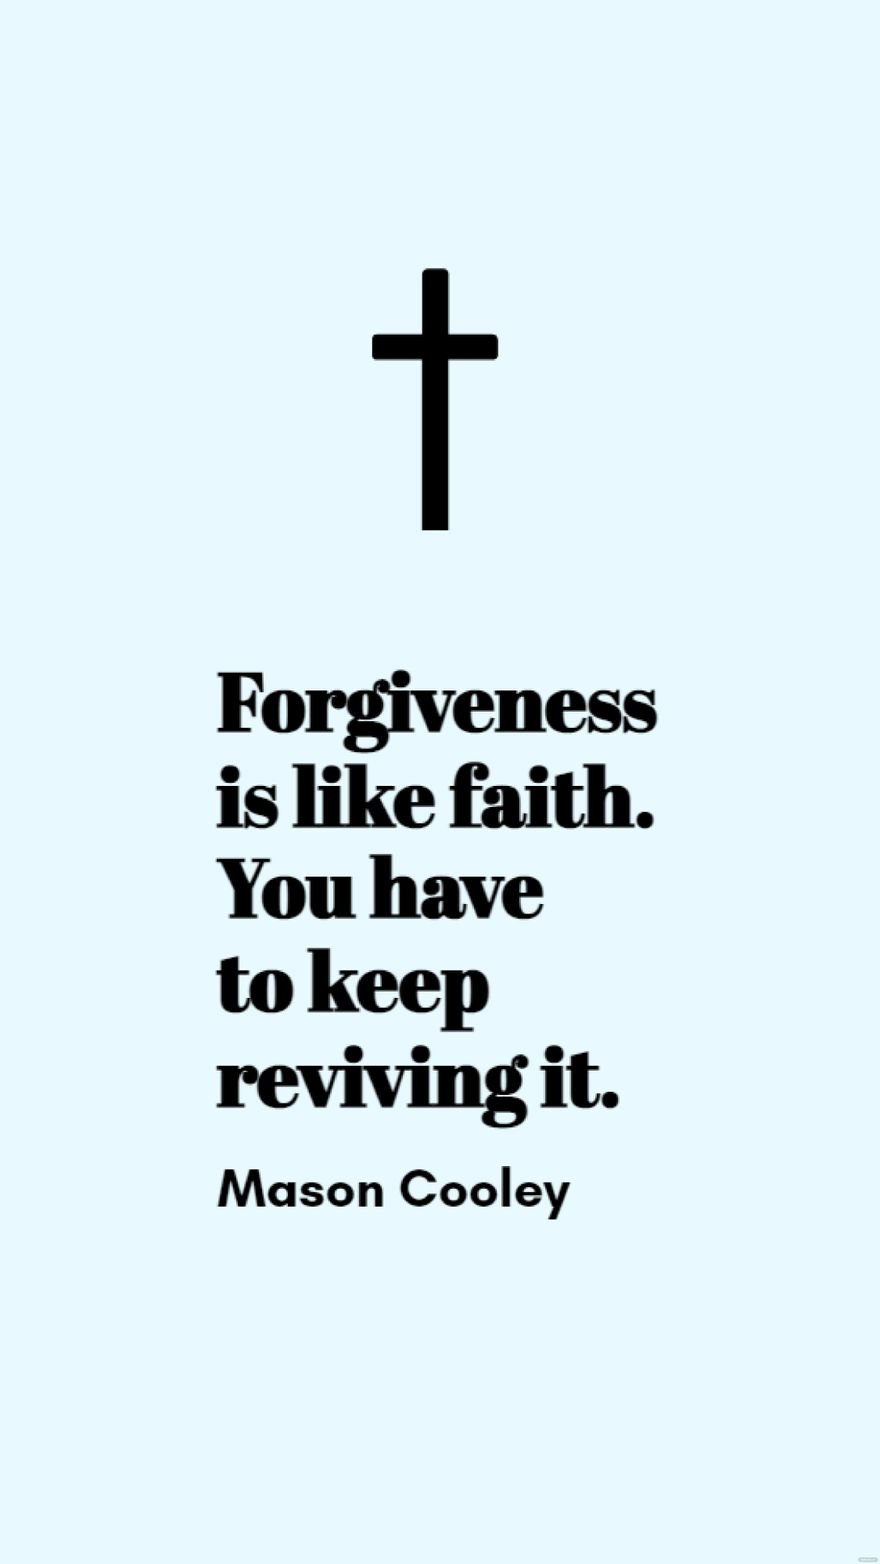 Mason Cooley - Forgiveness is like faith. You have to keep reviving it.